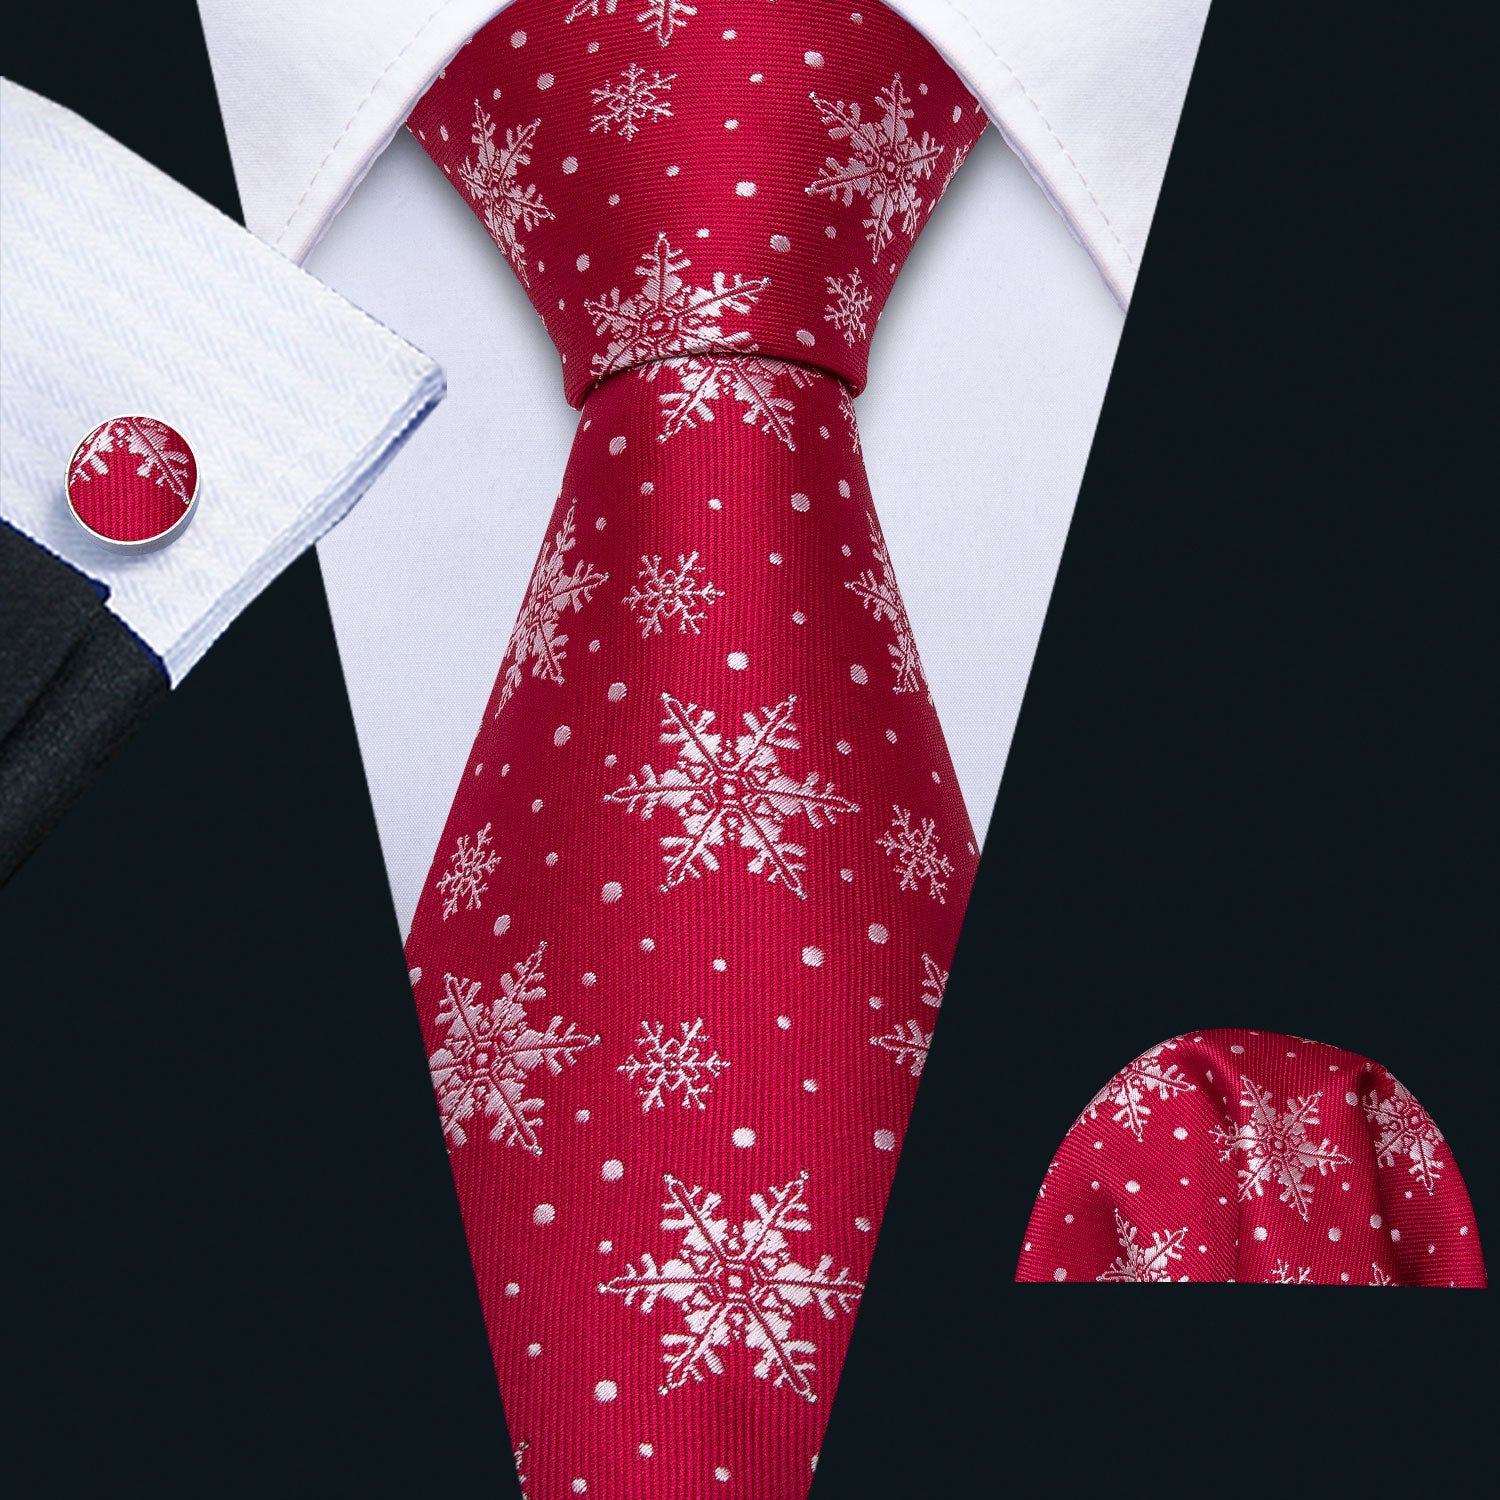 Barry.wang Christmas Tie Red White Snowflake Silk Men's Tie Pocket Square Cufflinks Set